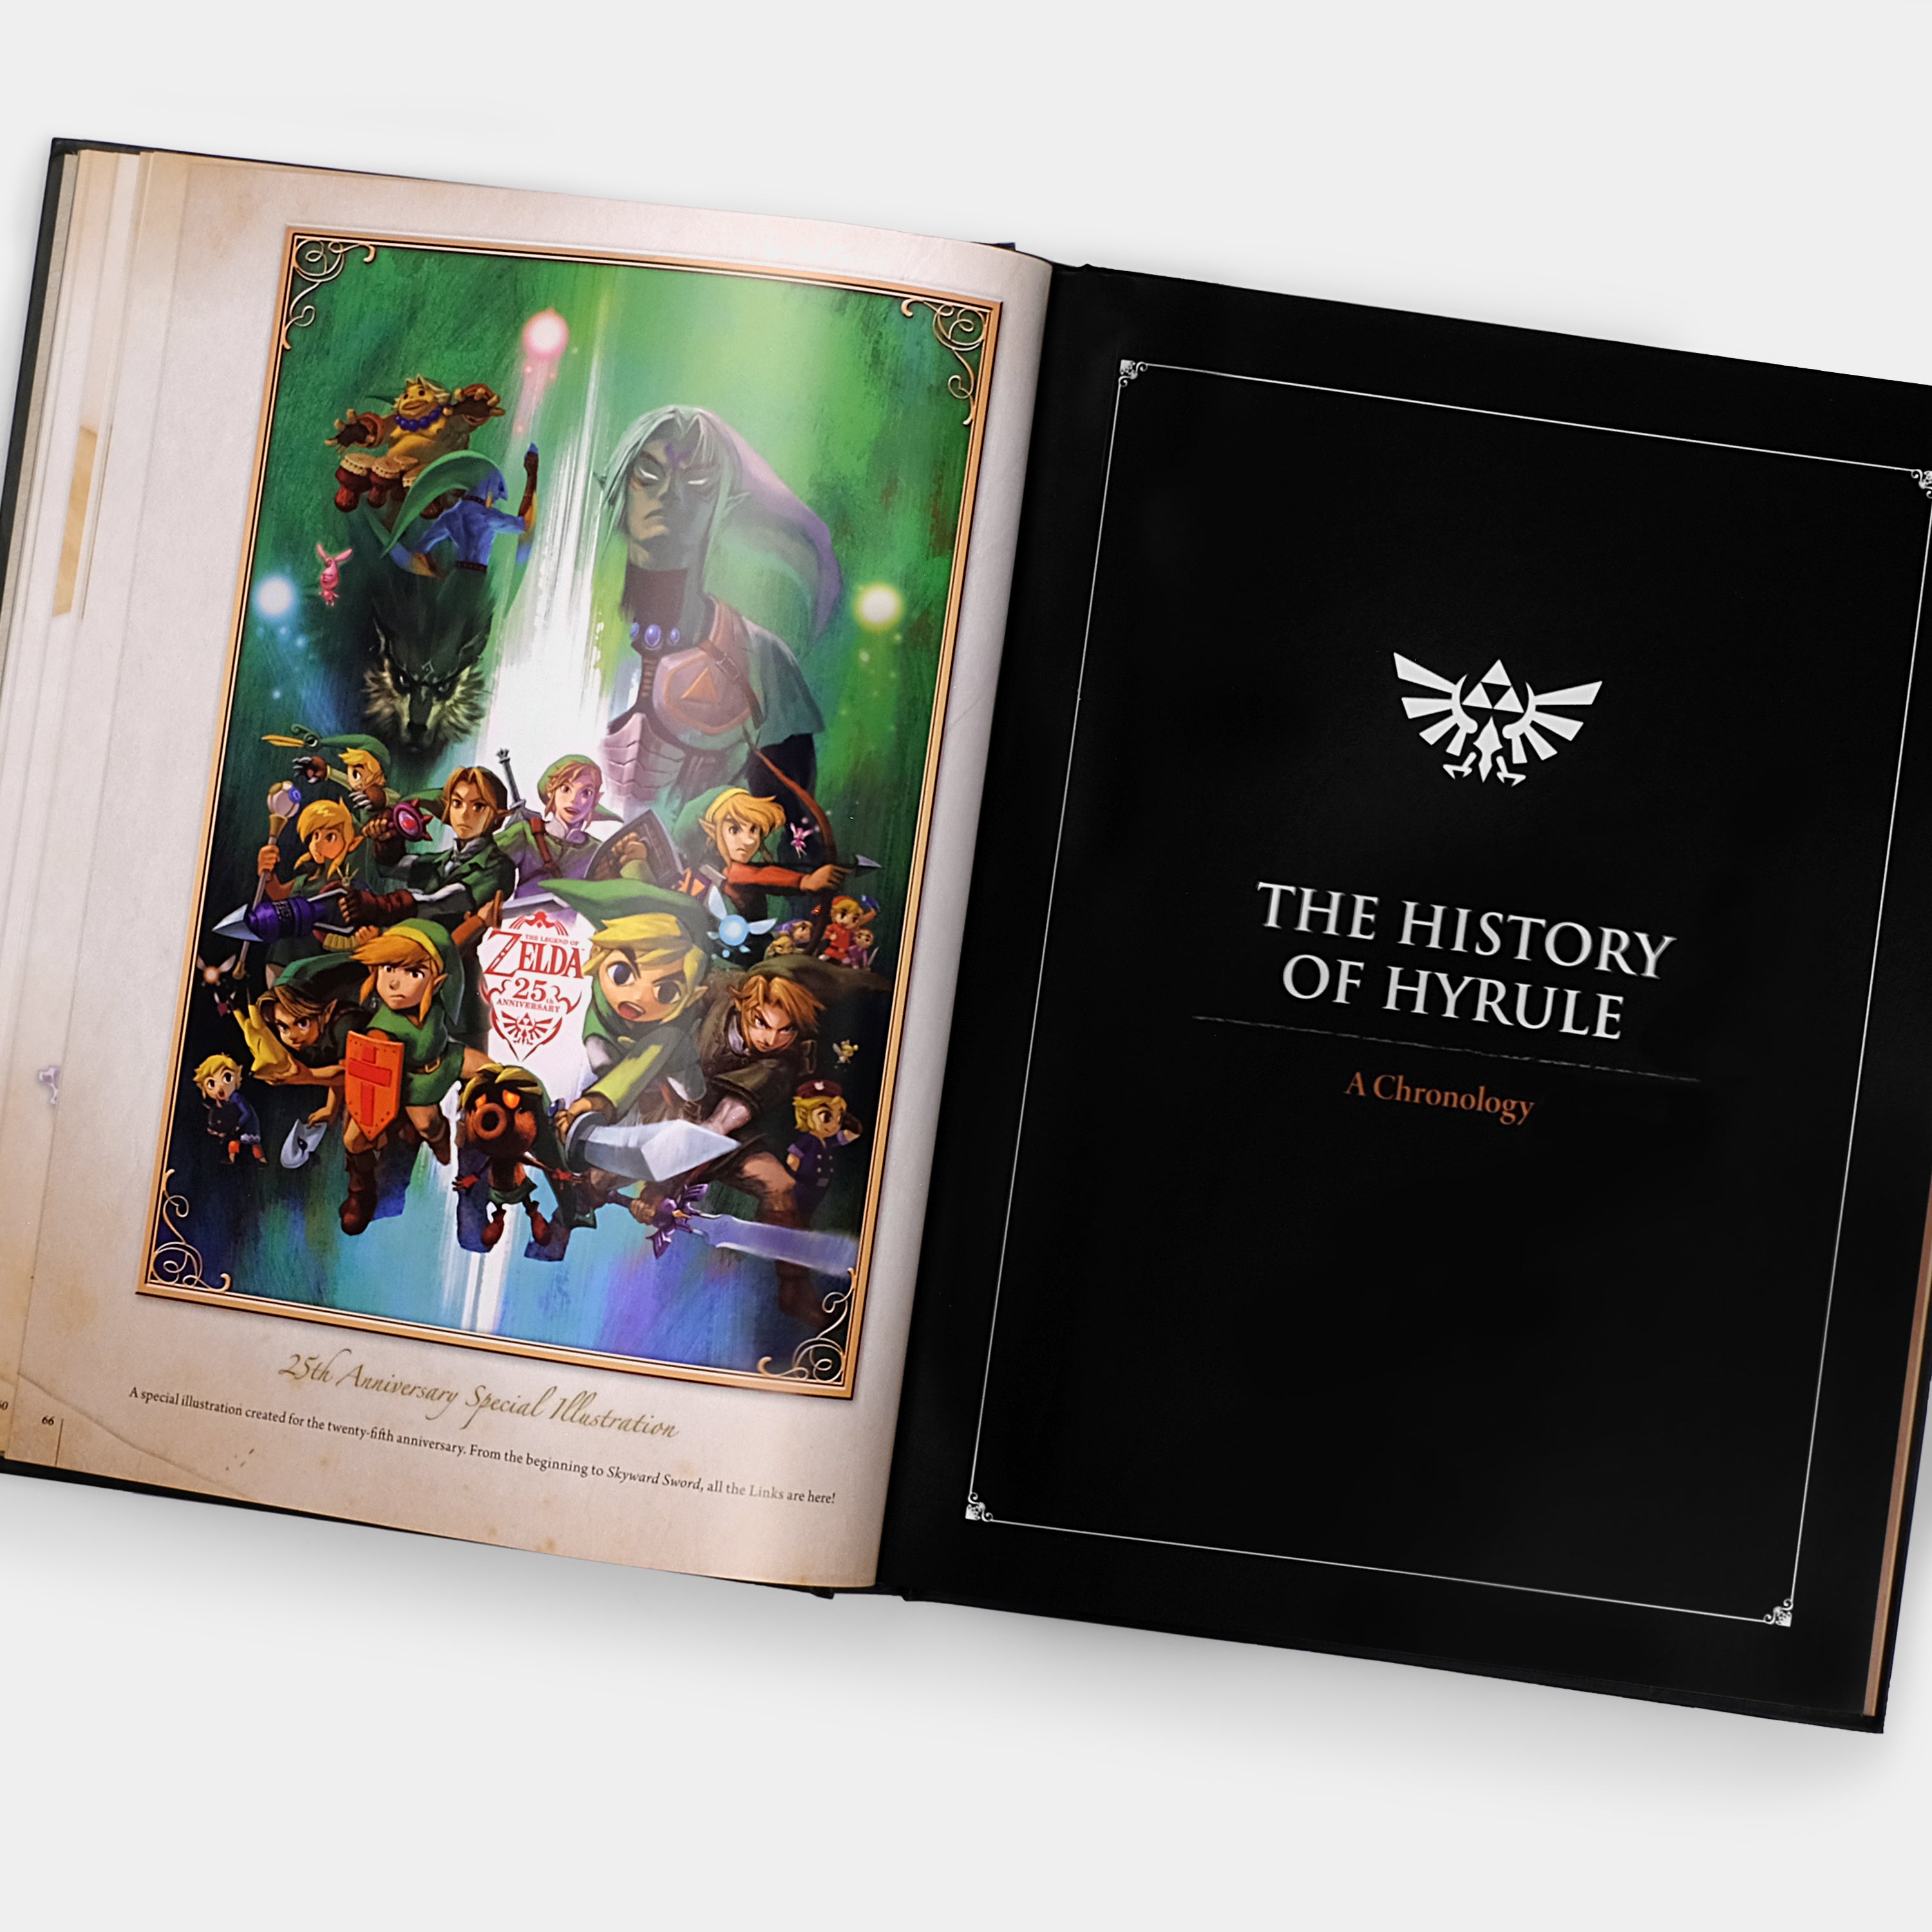 The Legend of Zelda: Hyrule Historia book by Shigeru Miyamoto